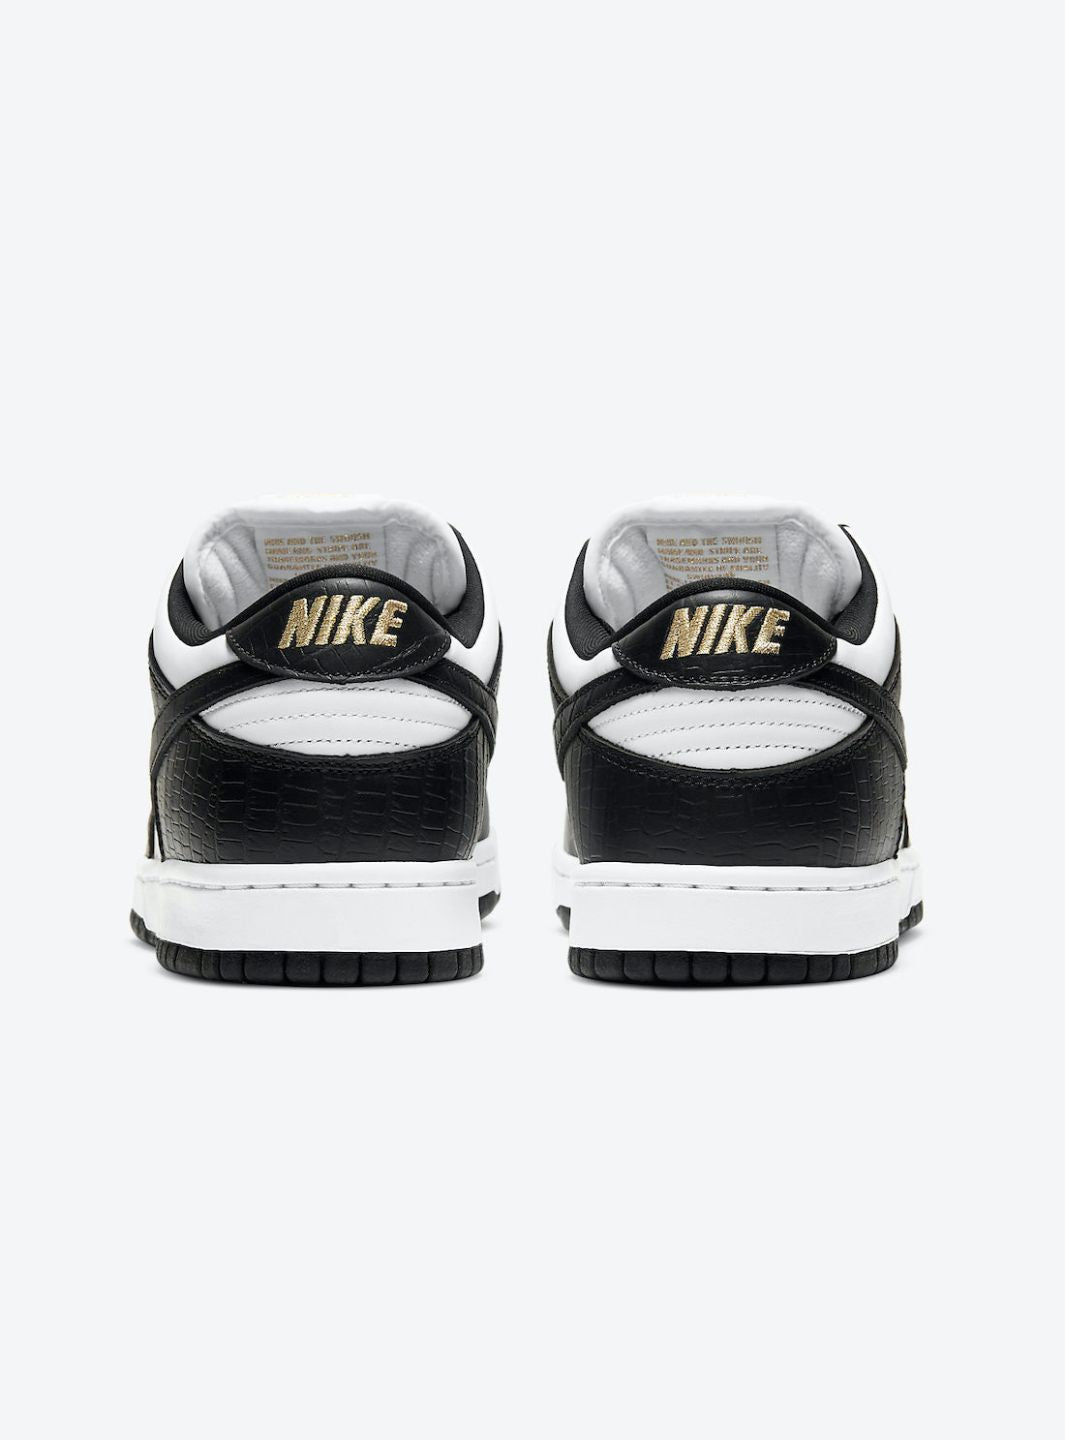 Nike SB Dunk Low Supreme Stars Black (2021) - DH3228-102 | ResellZone